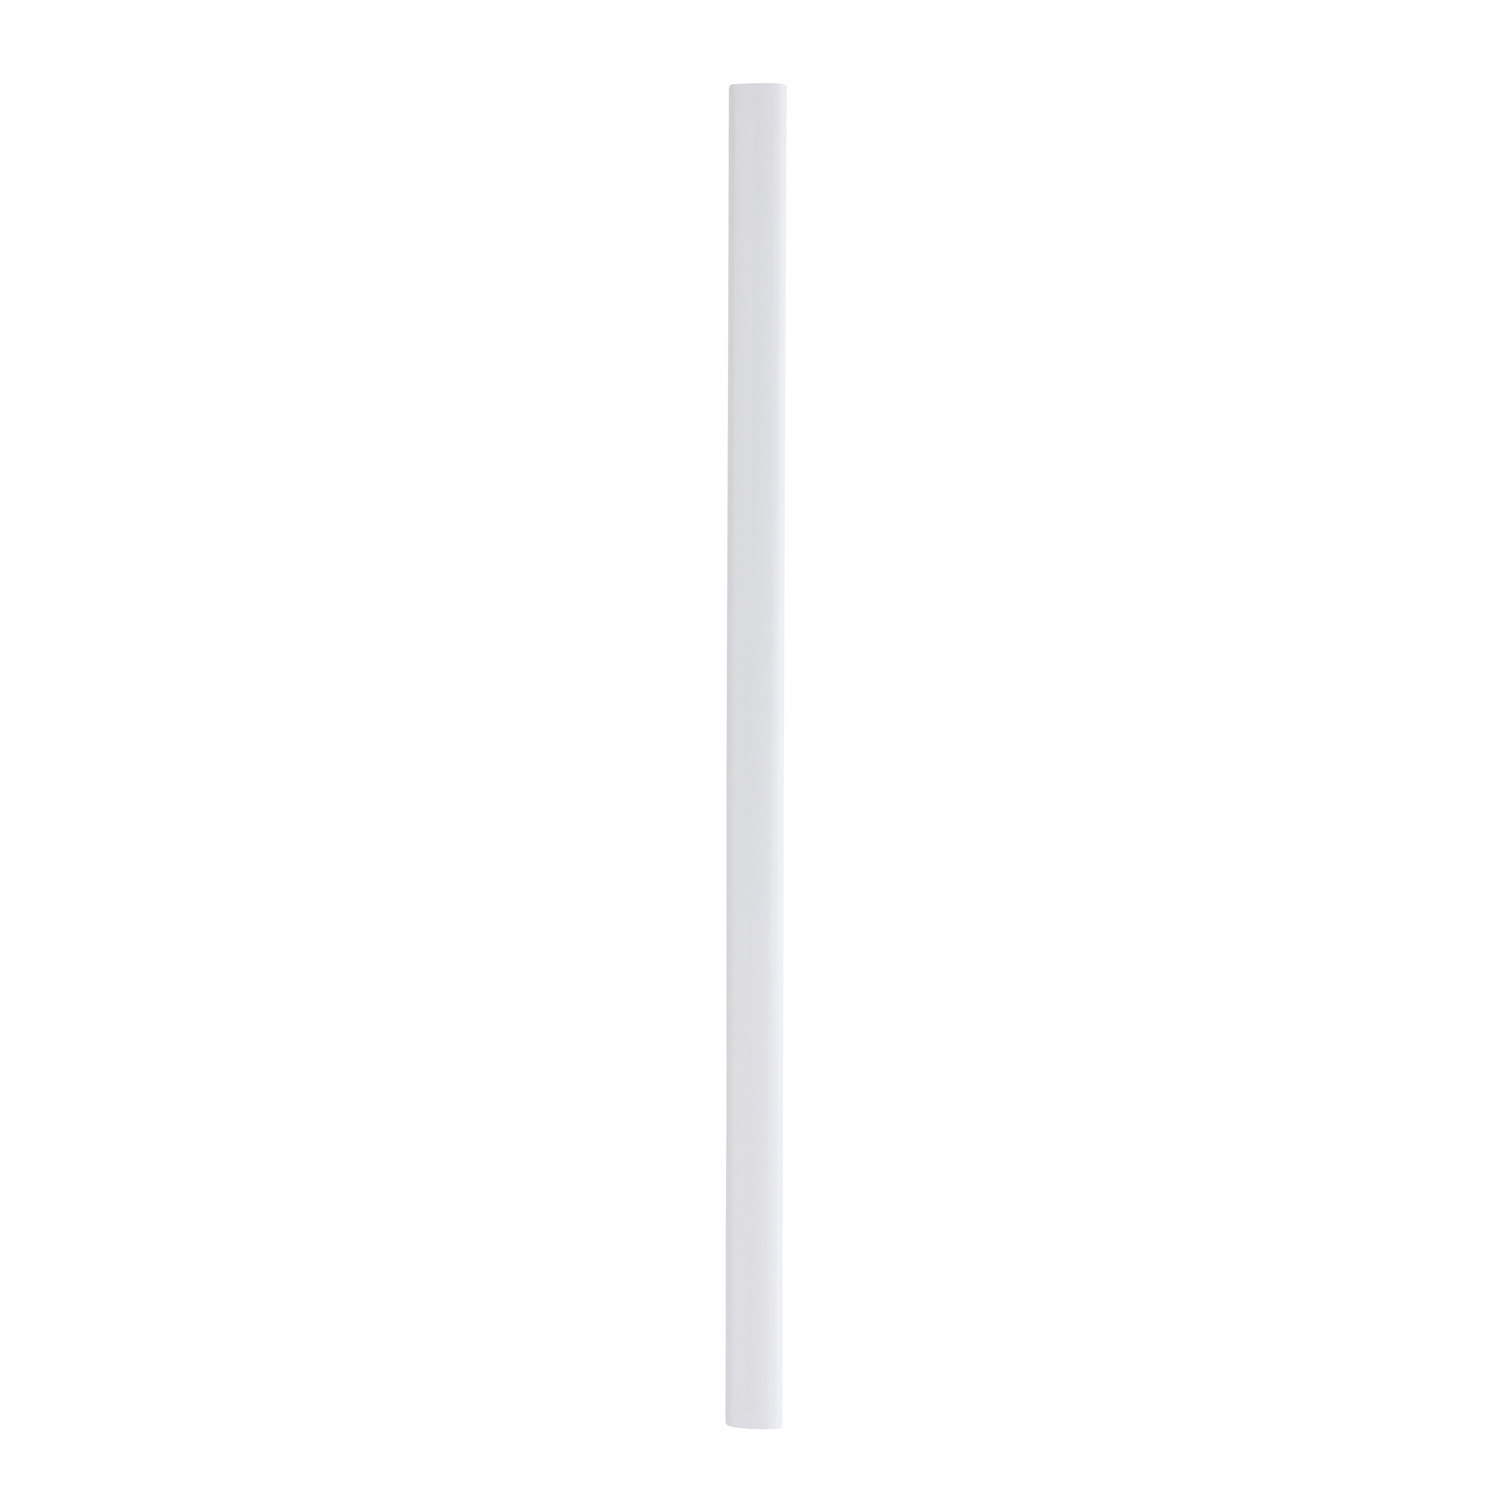 Деревянный карандаш, 25 см, белый, дерево